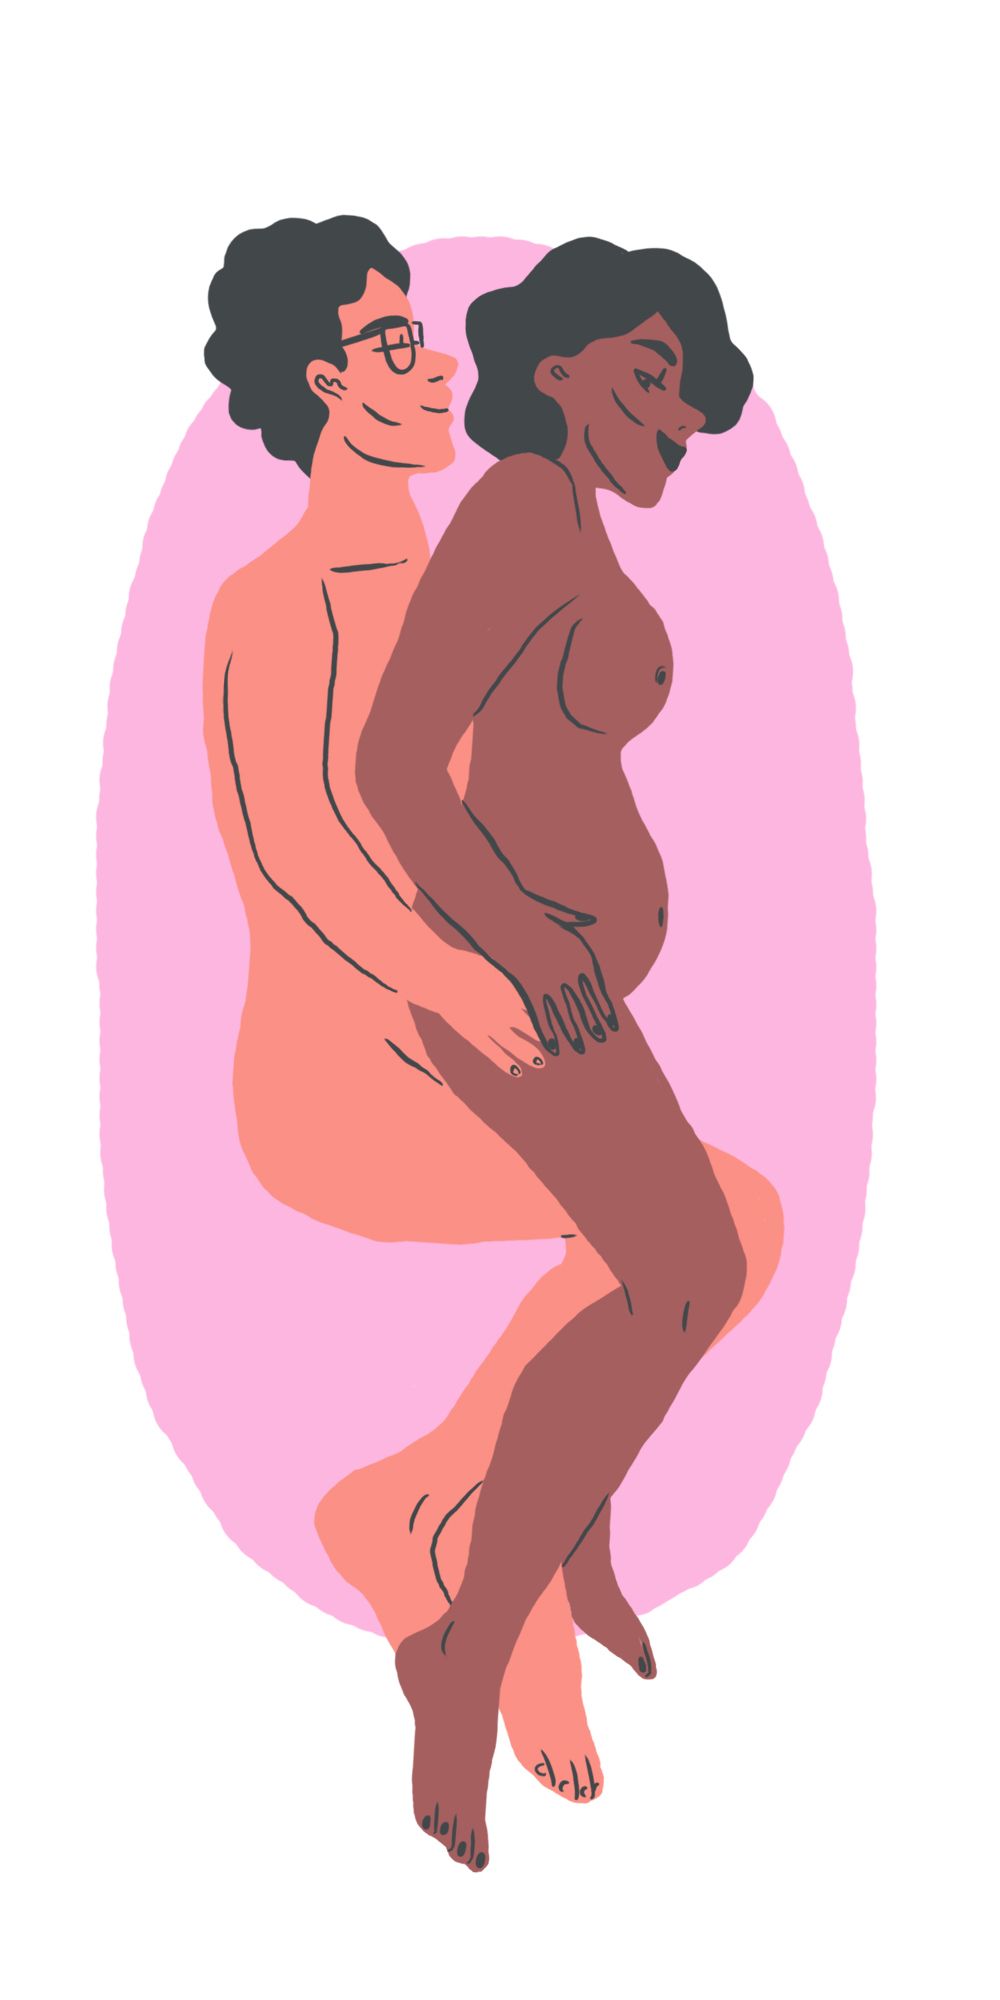 Third trimester sex position